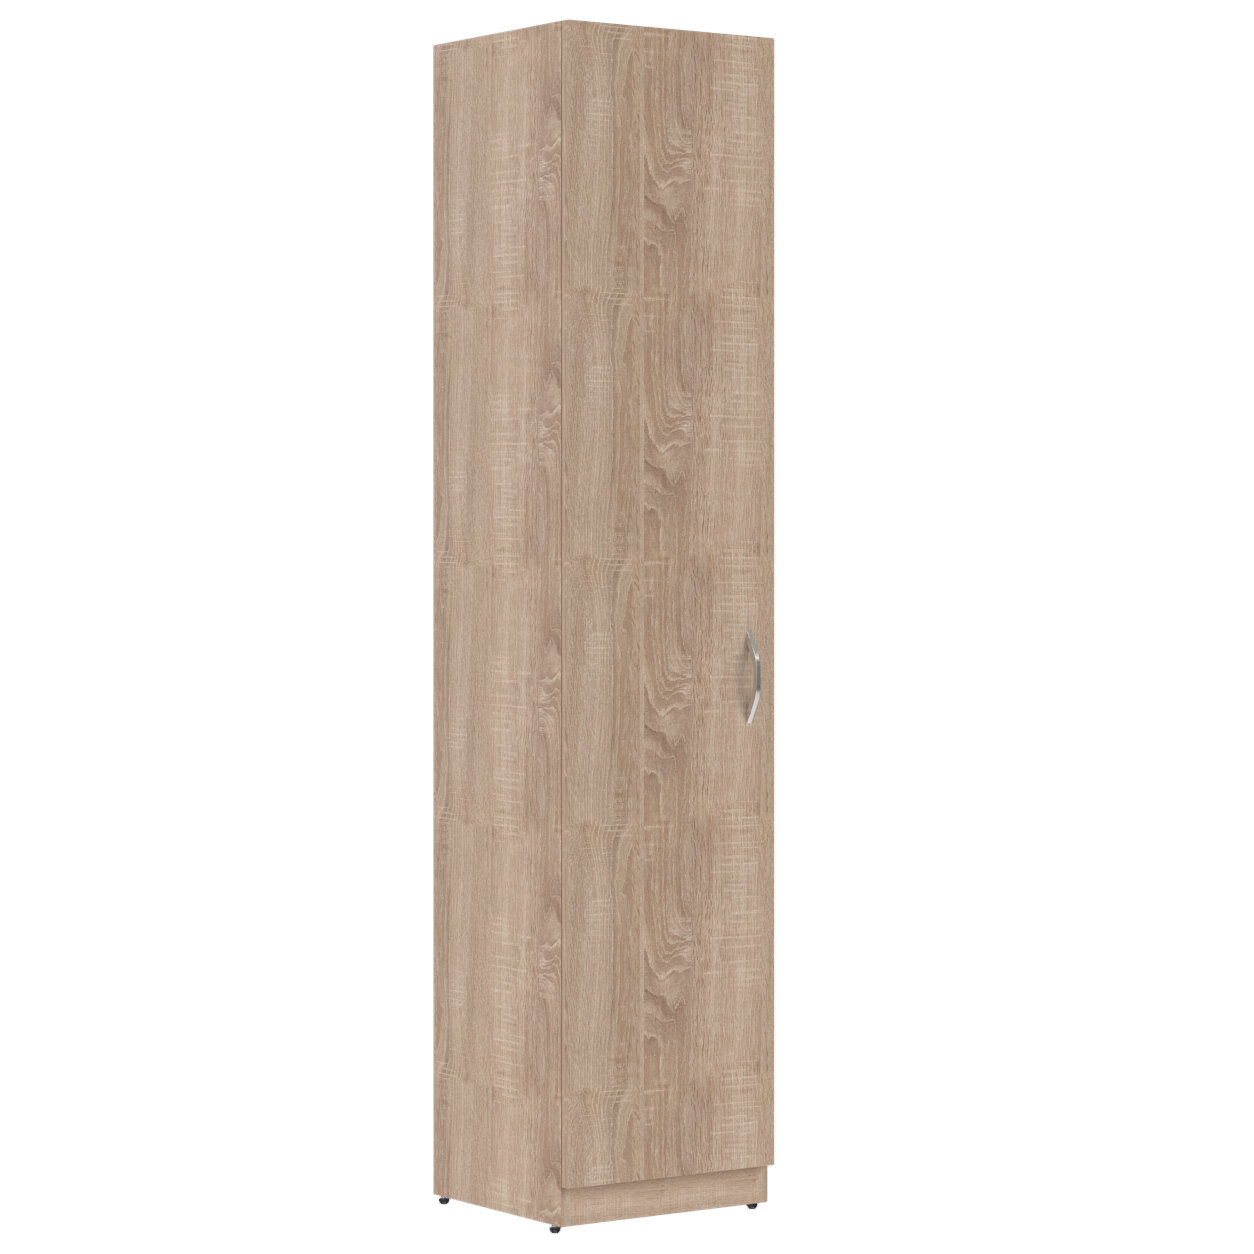 Шкаф пенал напольный SKYLAND SIMPLE SR-5U.1(L), узкий шкаф распашной, левый, дуб сонома светлый, 38.6х37.5х181.5 см